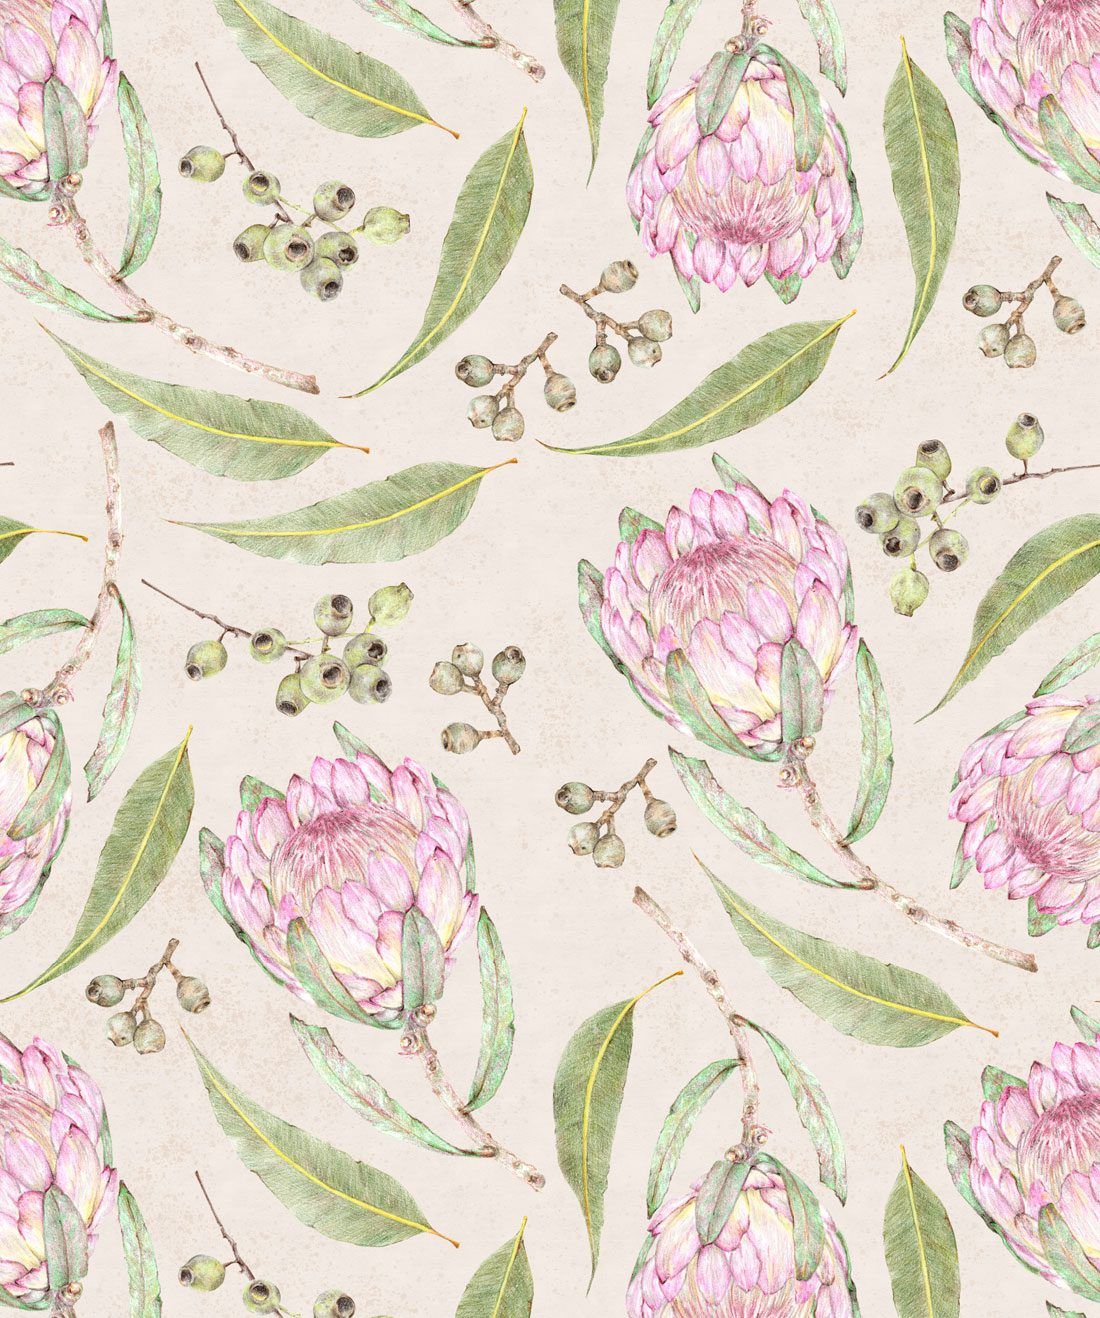 Proteas & Gumnuts is a feminine floral wallpaper